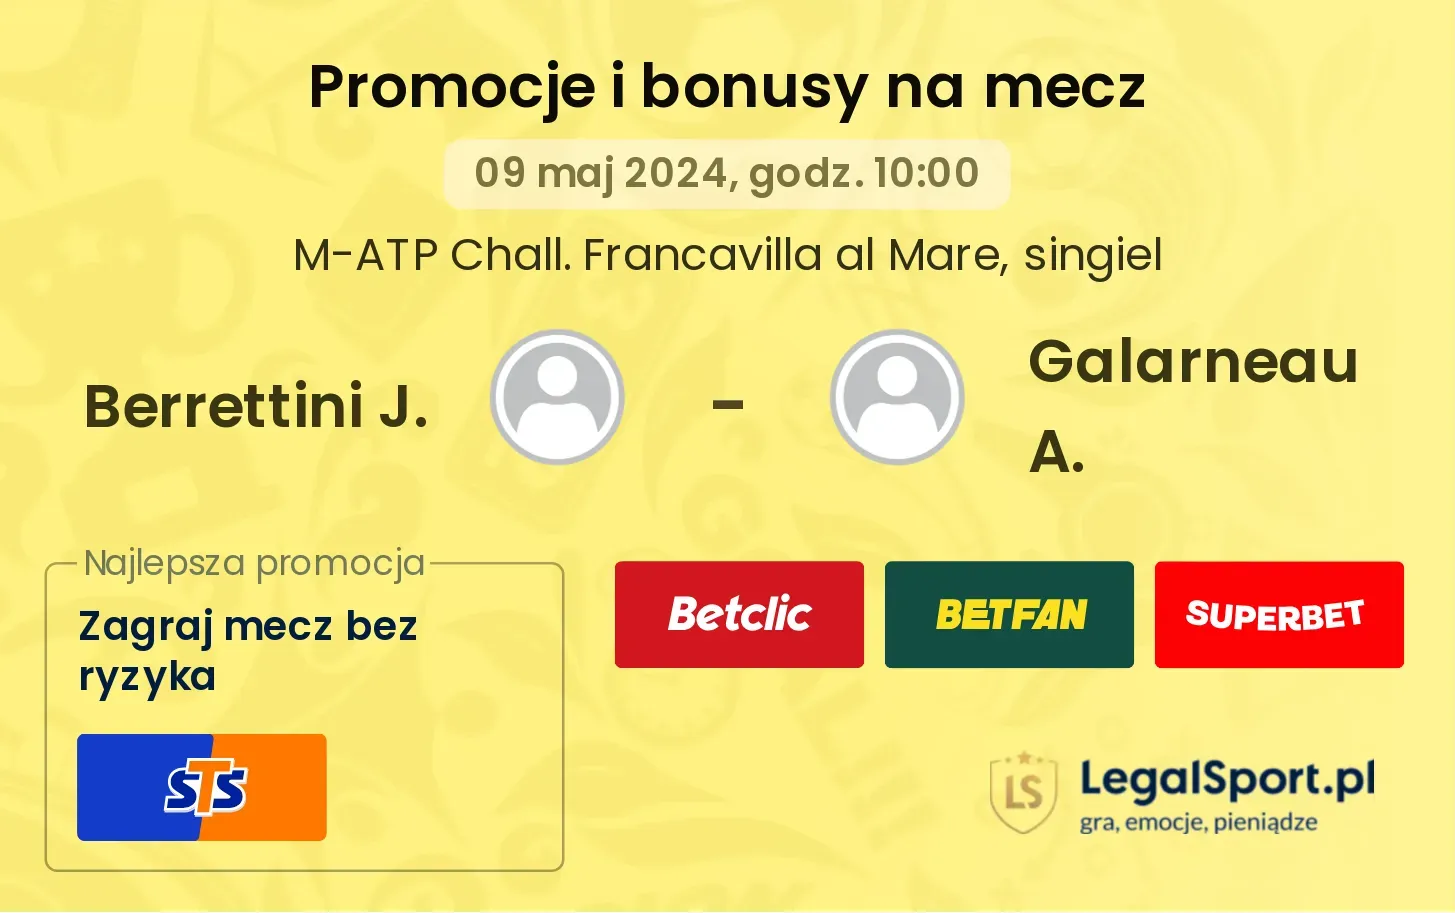 Berrettini J. - Galarneau A. promocje bonusy na mecz